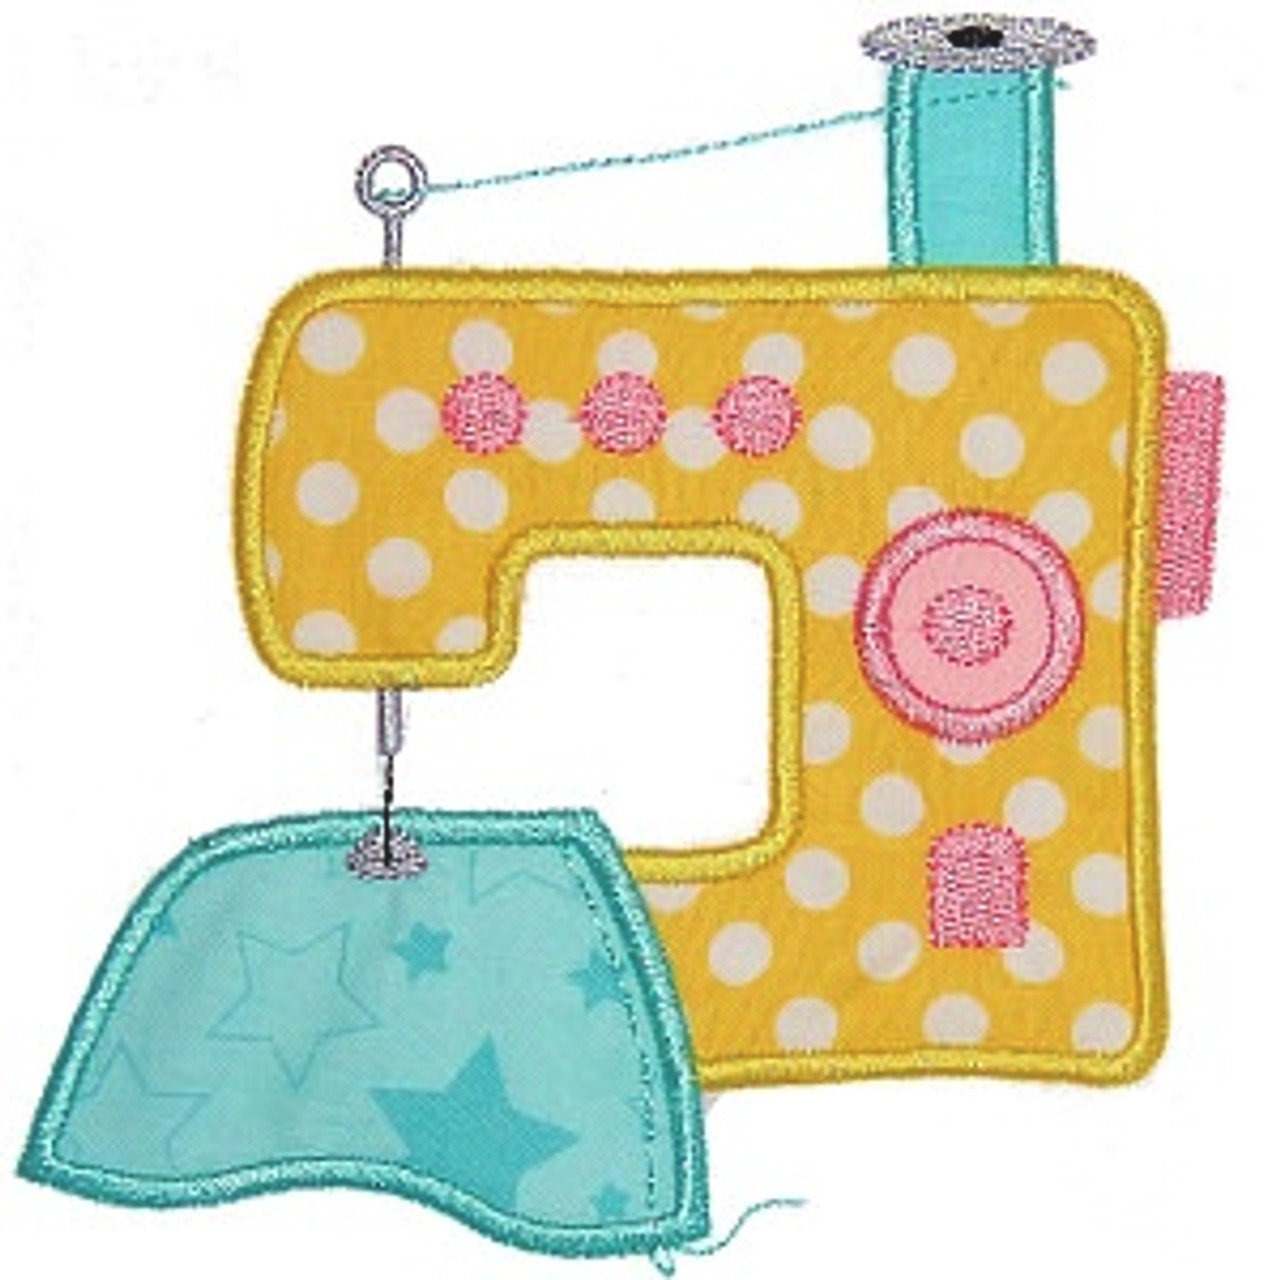 Sewing Machine Applique Embroidery Machine Design